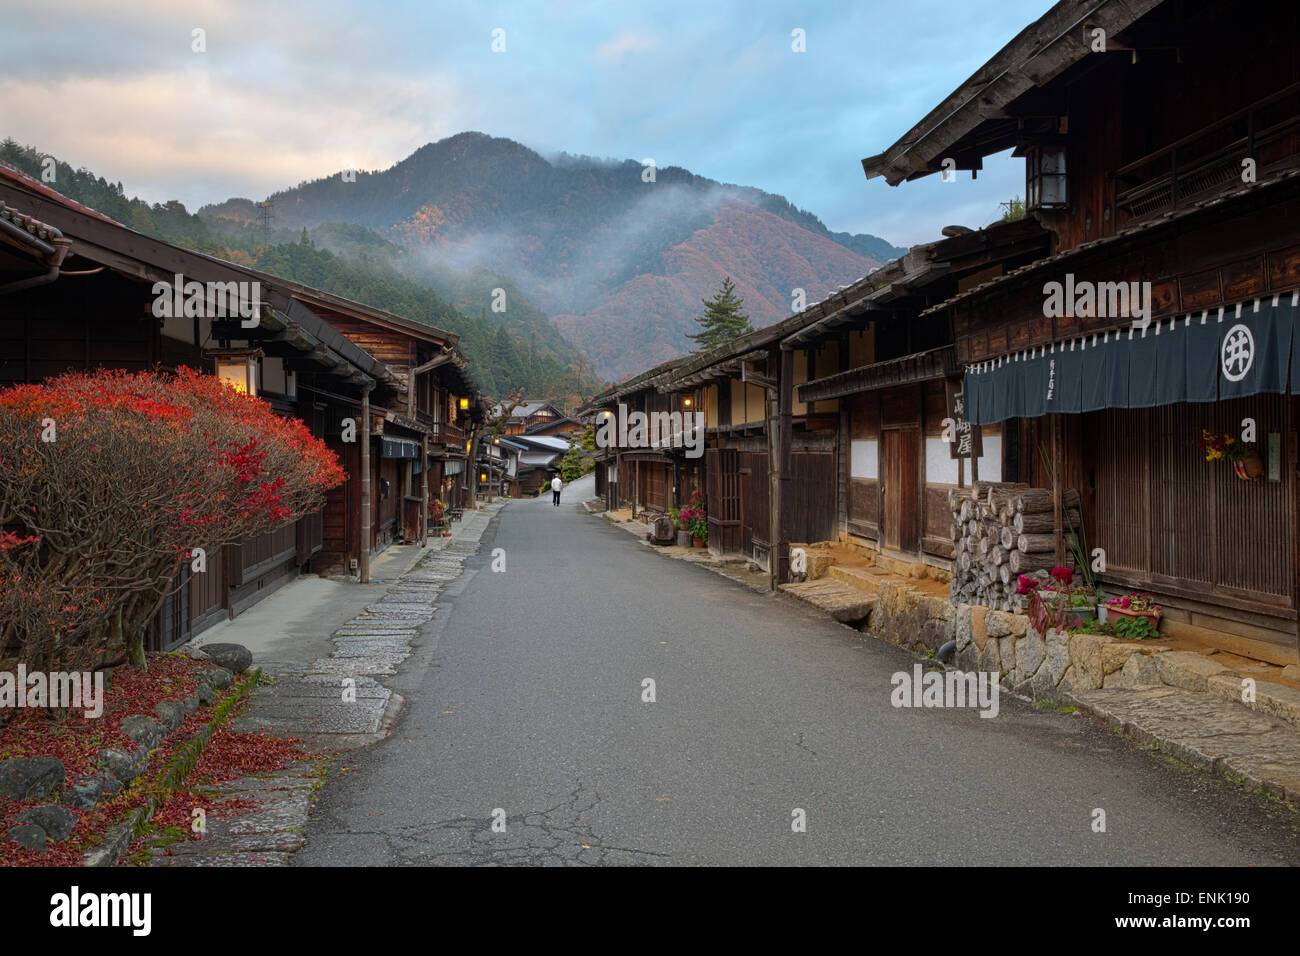 Wooden houses of old post town, Tsumago, Kiso Valley Nakasendo, Central Honshu, Japan, Asia Stock Photo